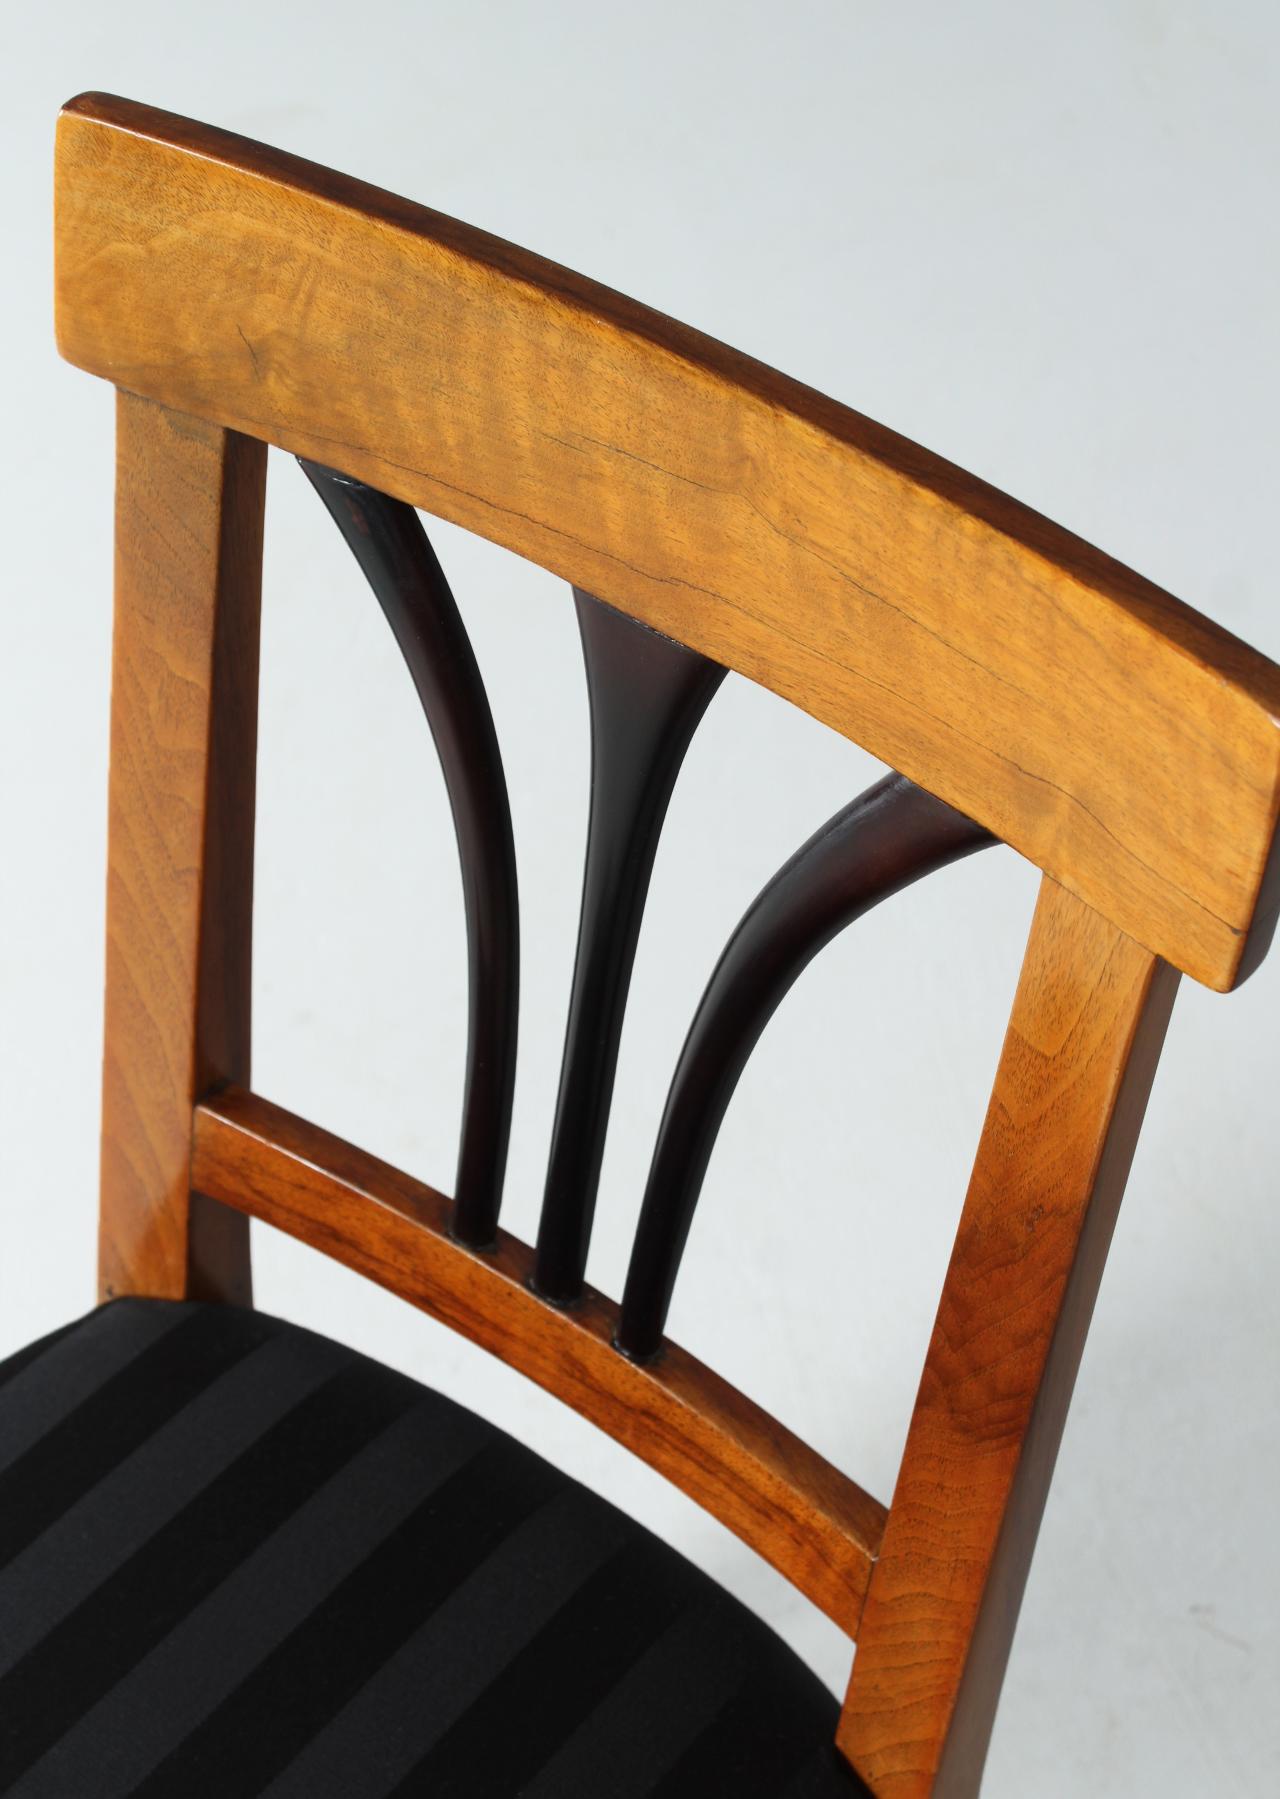 Single solid walnut Biedermeier chair

Southern Germany
Walnut
Biedermeier around 1820-1830

Dimensions: H x W x D: 90 x 45 x 42 cm, seat height: 48 cm

Description:
Classic Biedermeier chair from around 1820-1830.

Made of solid walnut,